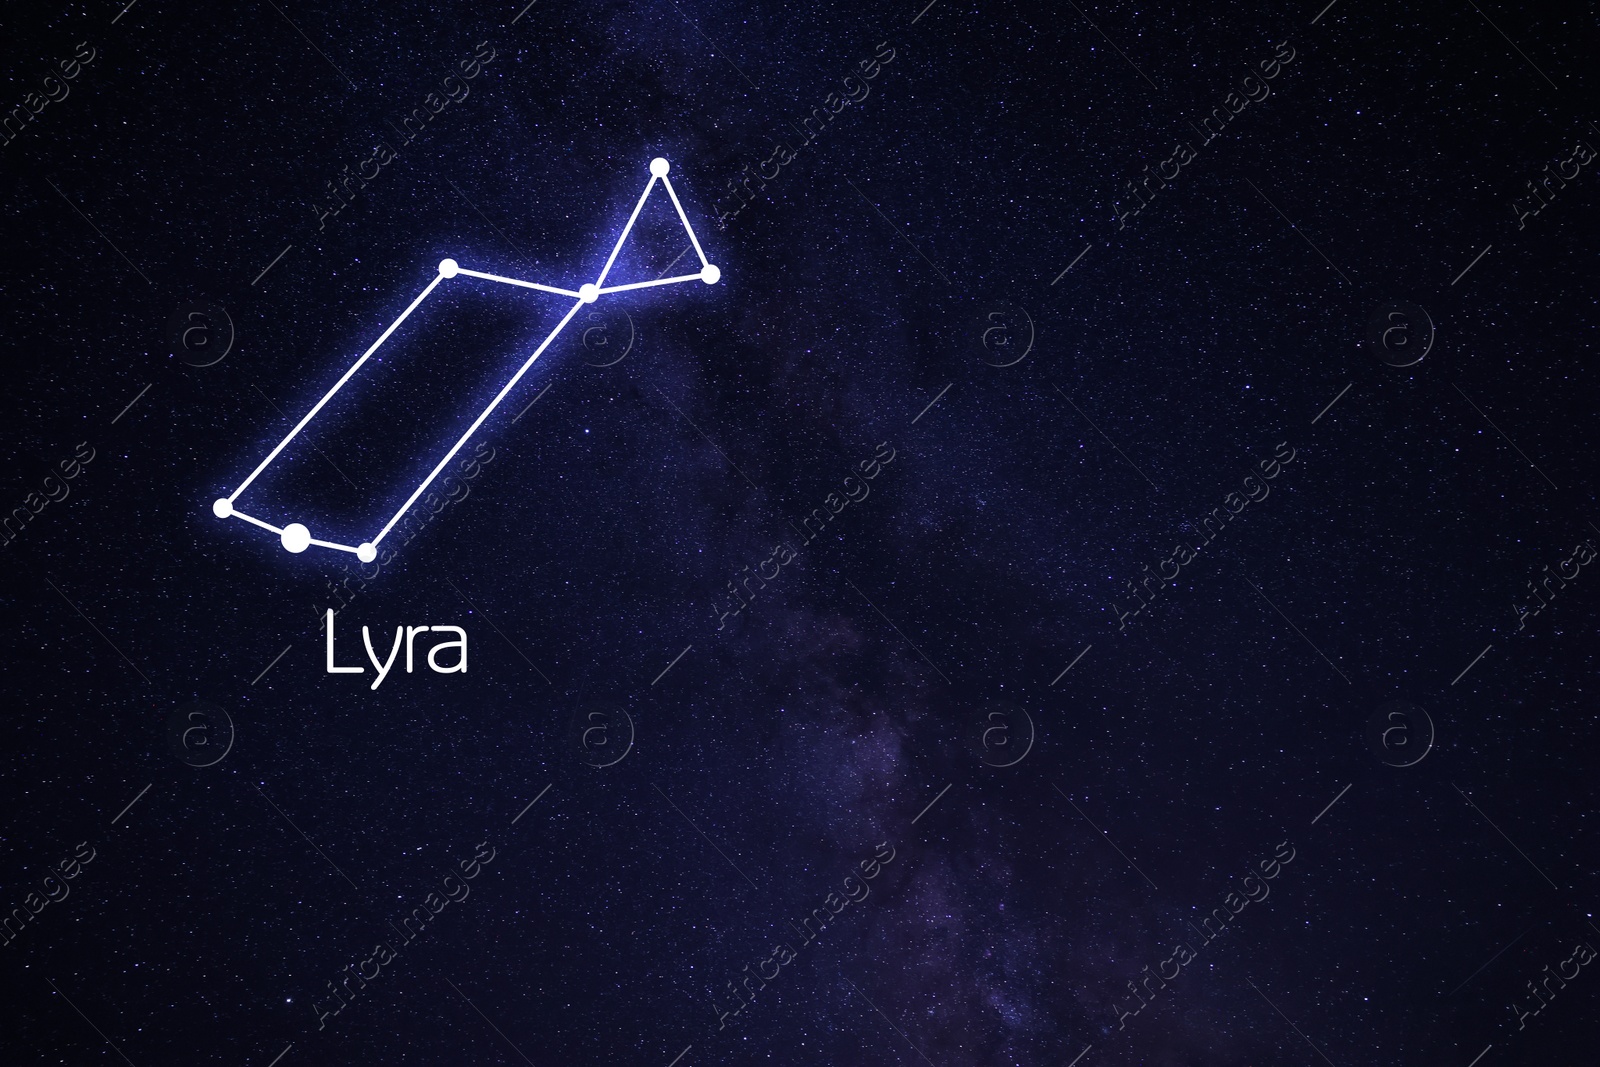 Image of Lyra constellation. Stick figure pattern in starry night sky